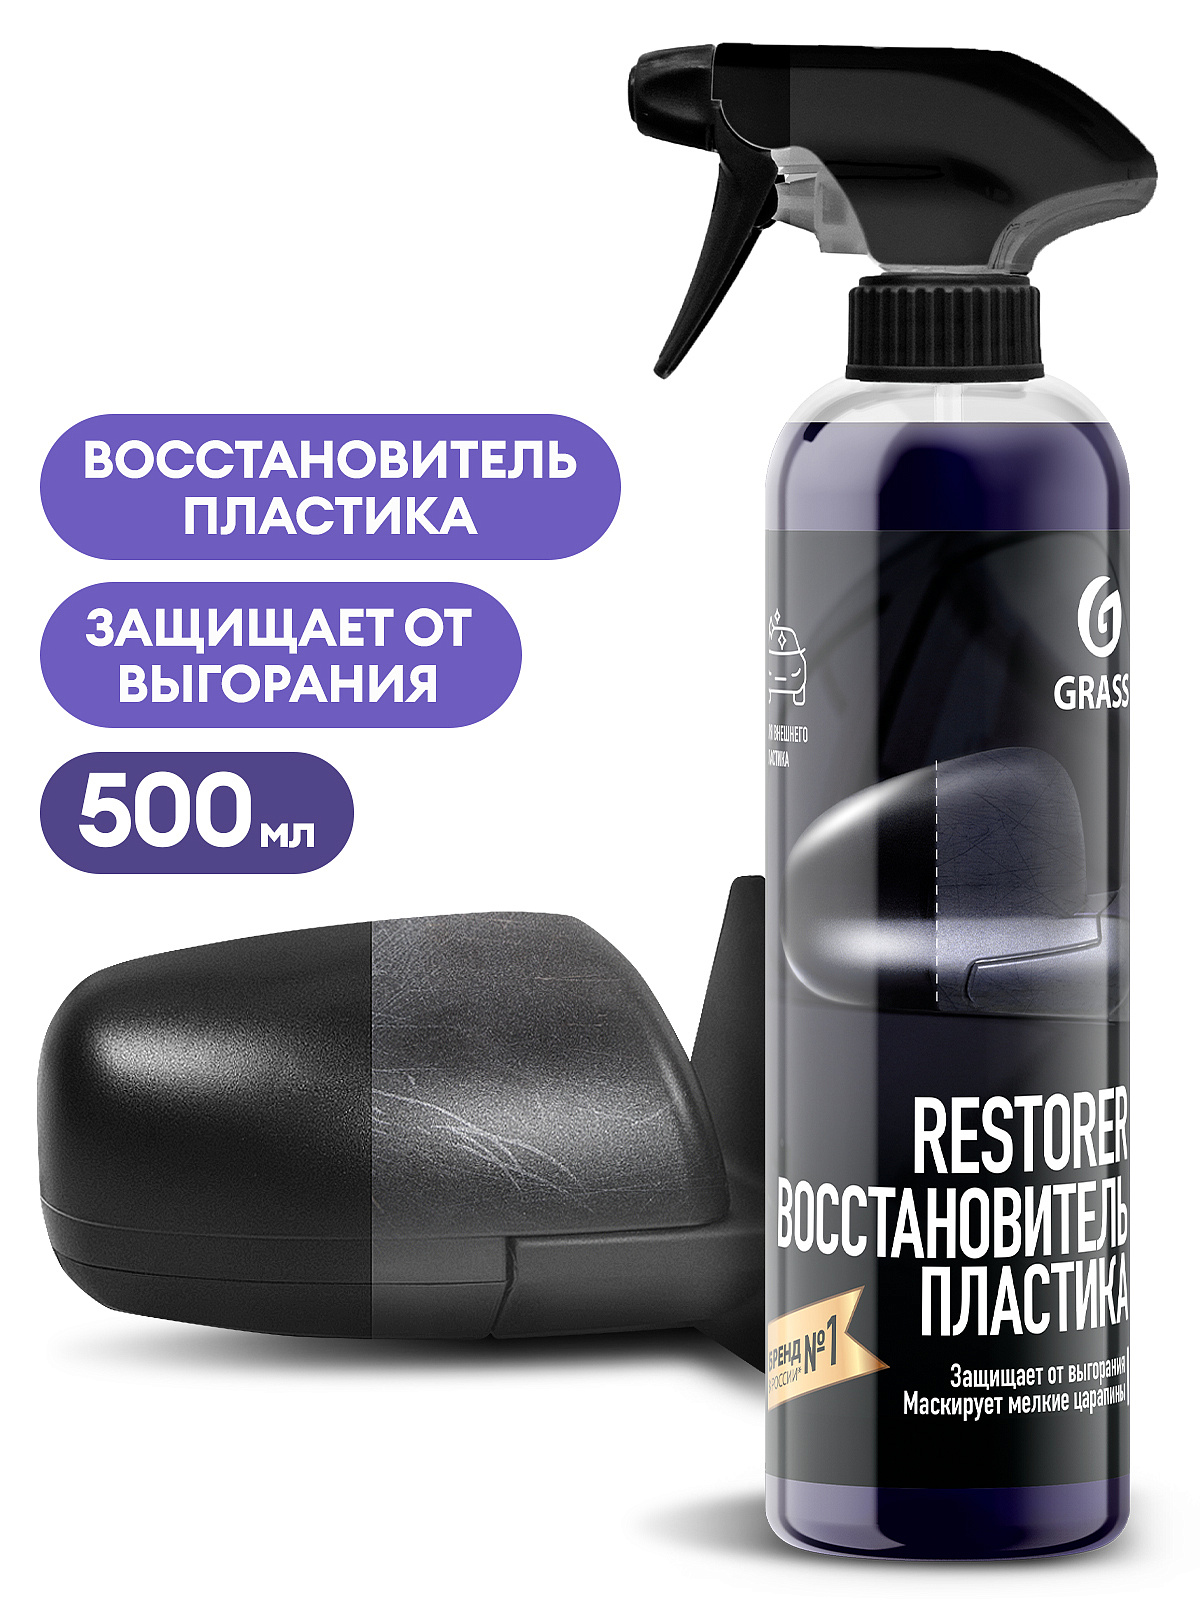 Восстановитель пластика "Restorer" (флакон 500мл)